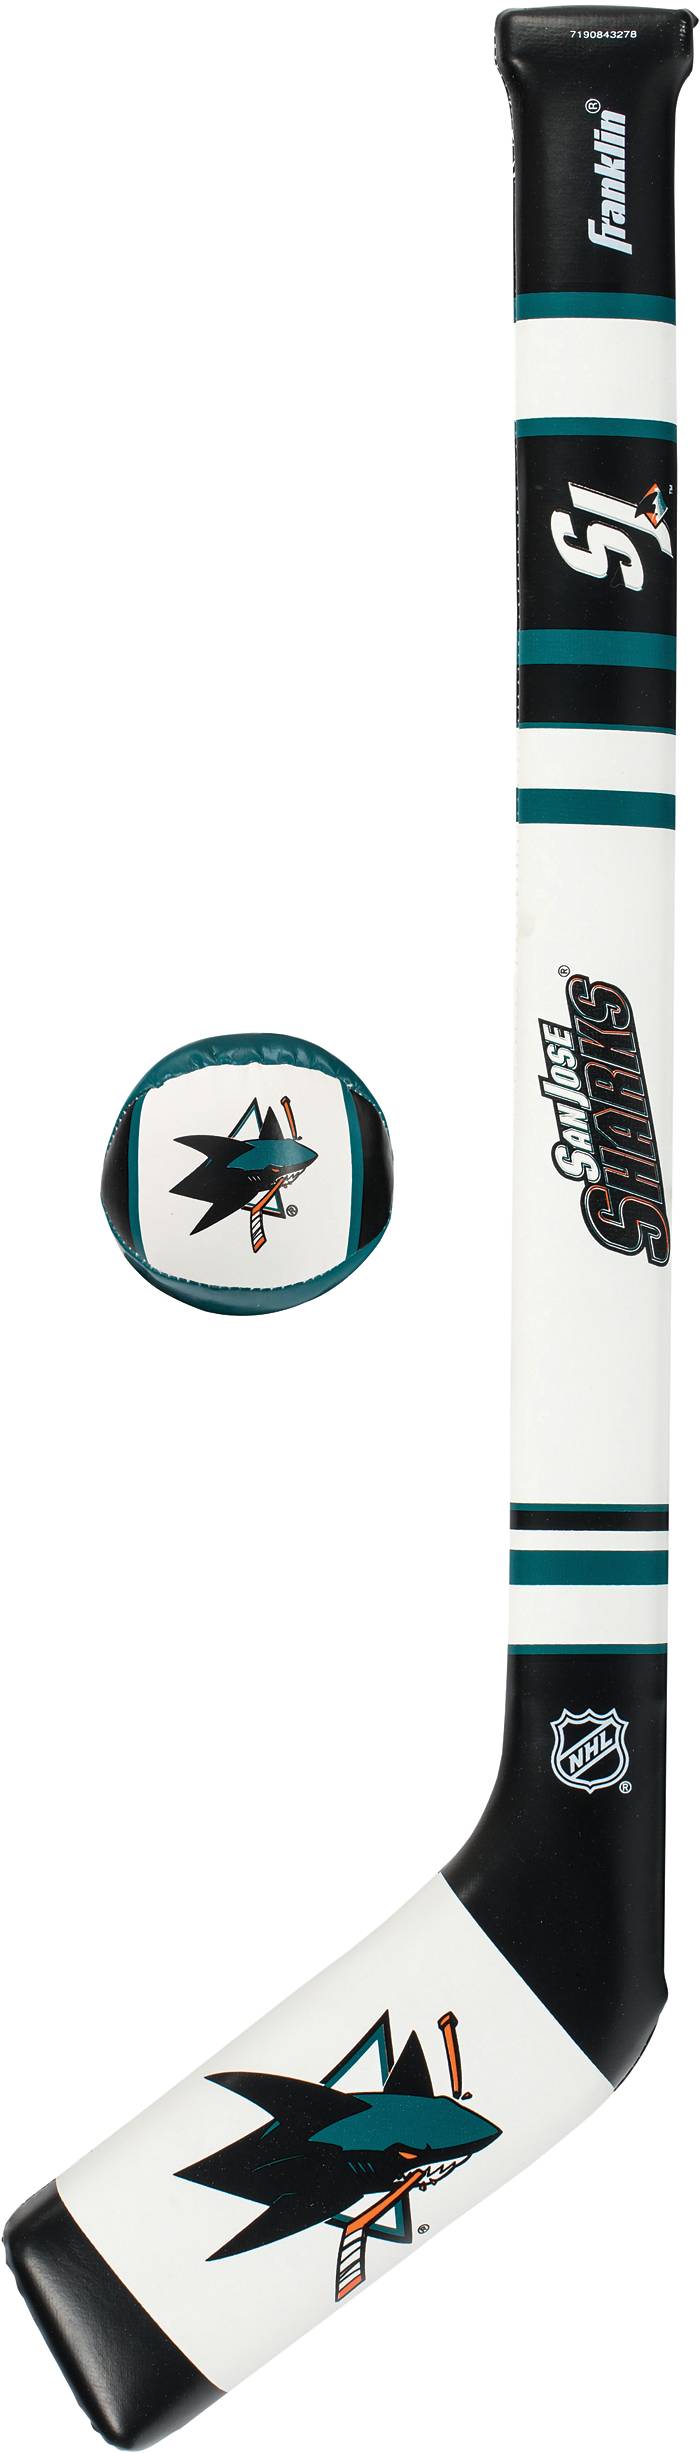 Black Jersey San Jose Sharks NHL Fan Apparel & Souvenirs for sale